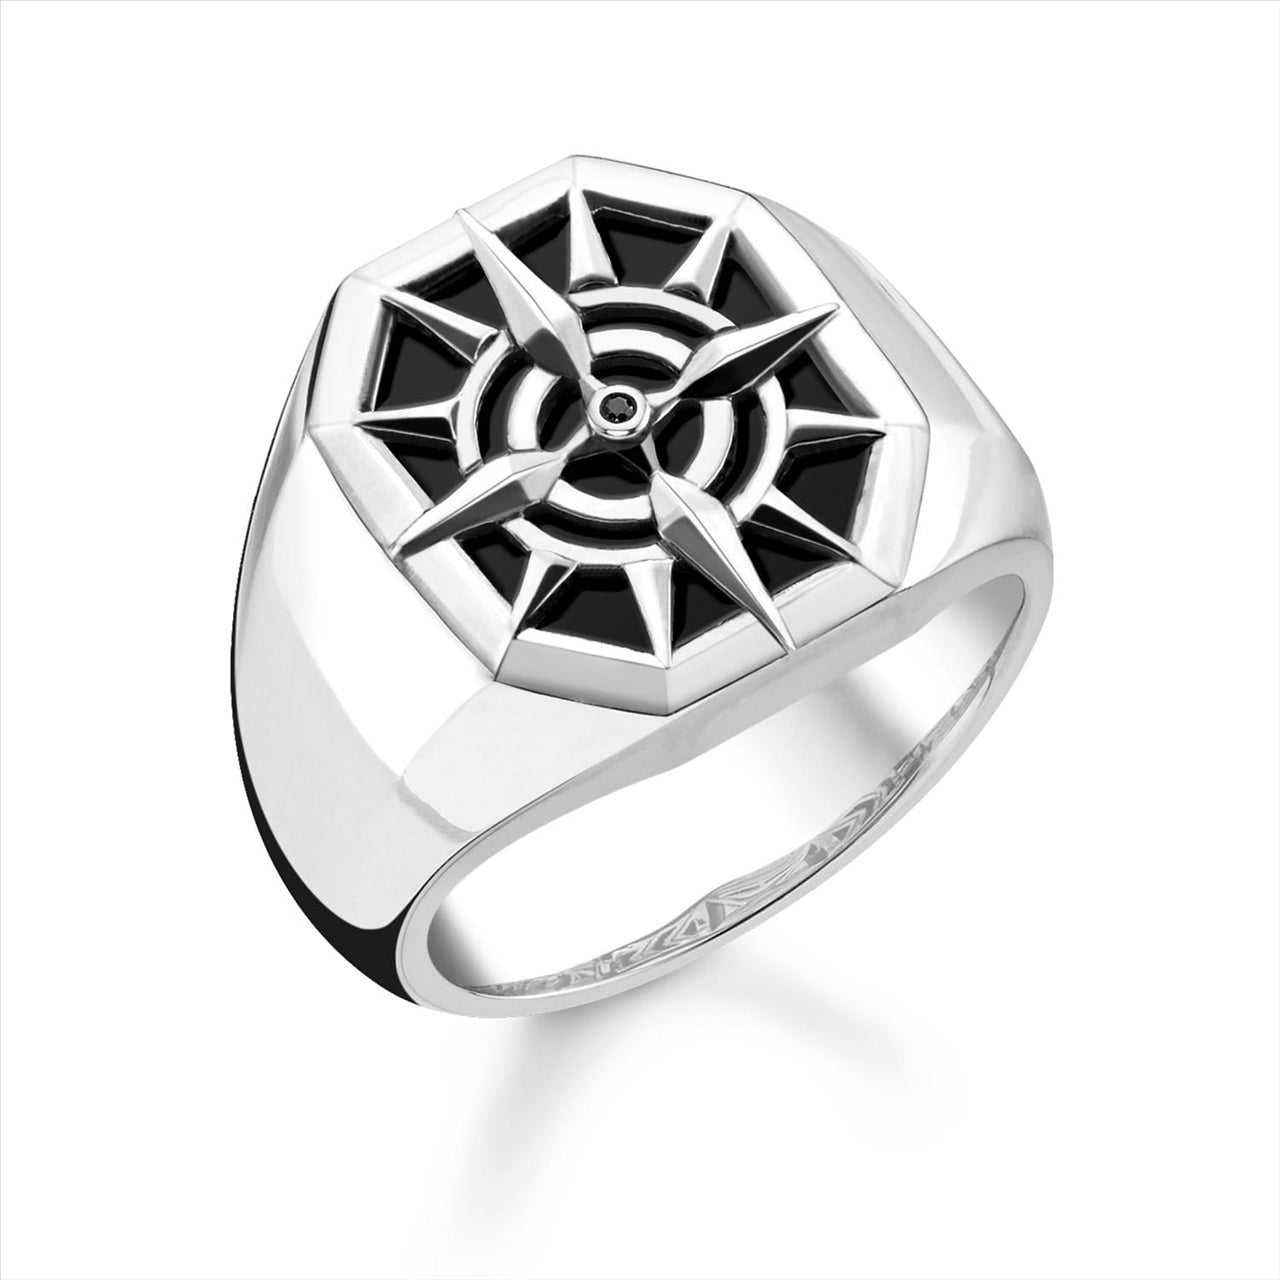 Thomas Sabo Mens Compass Design Signet Ring.